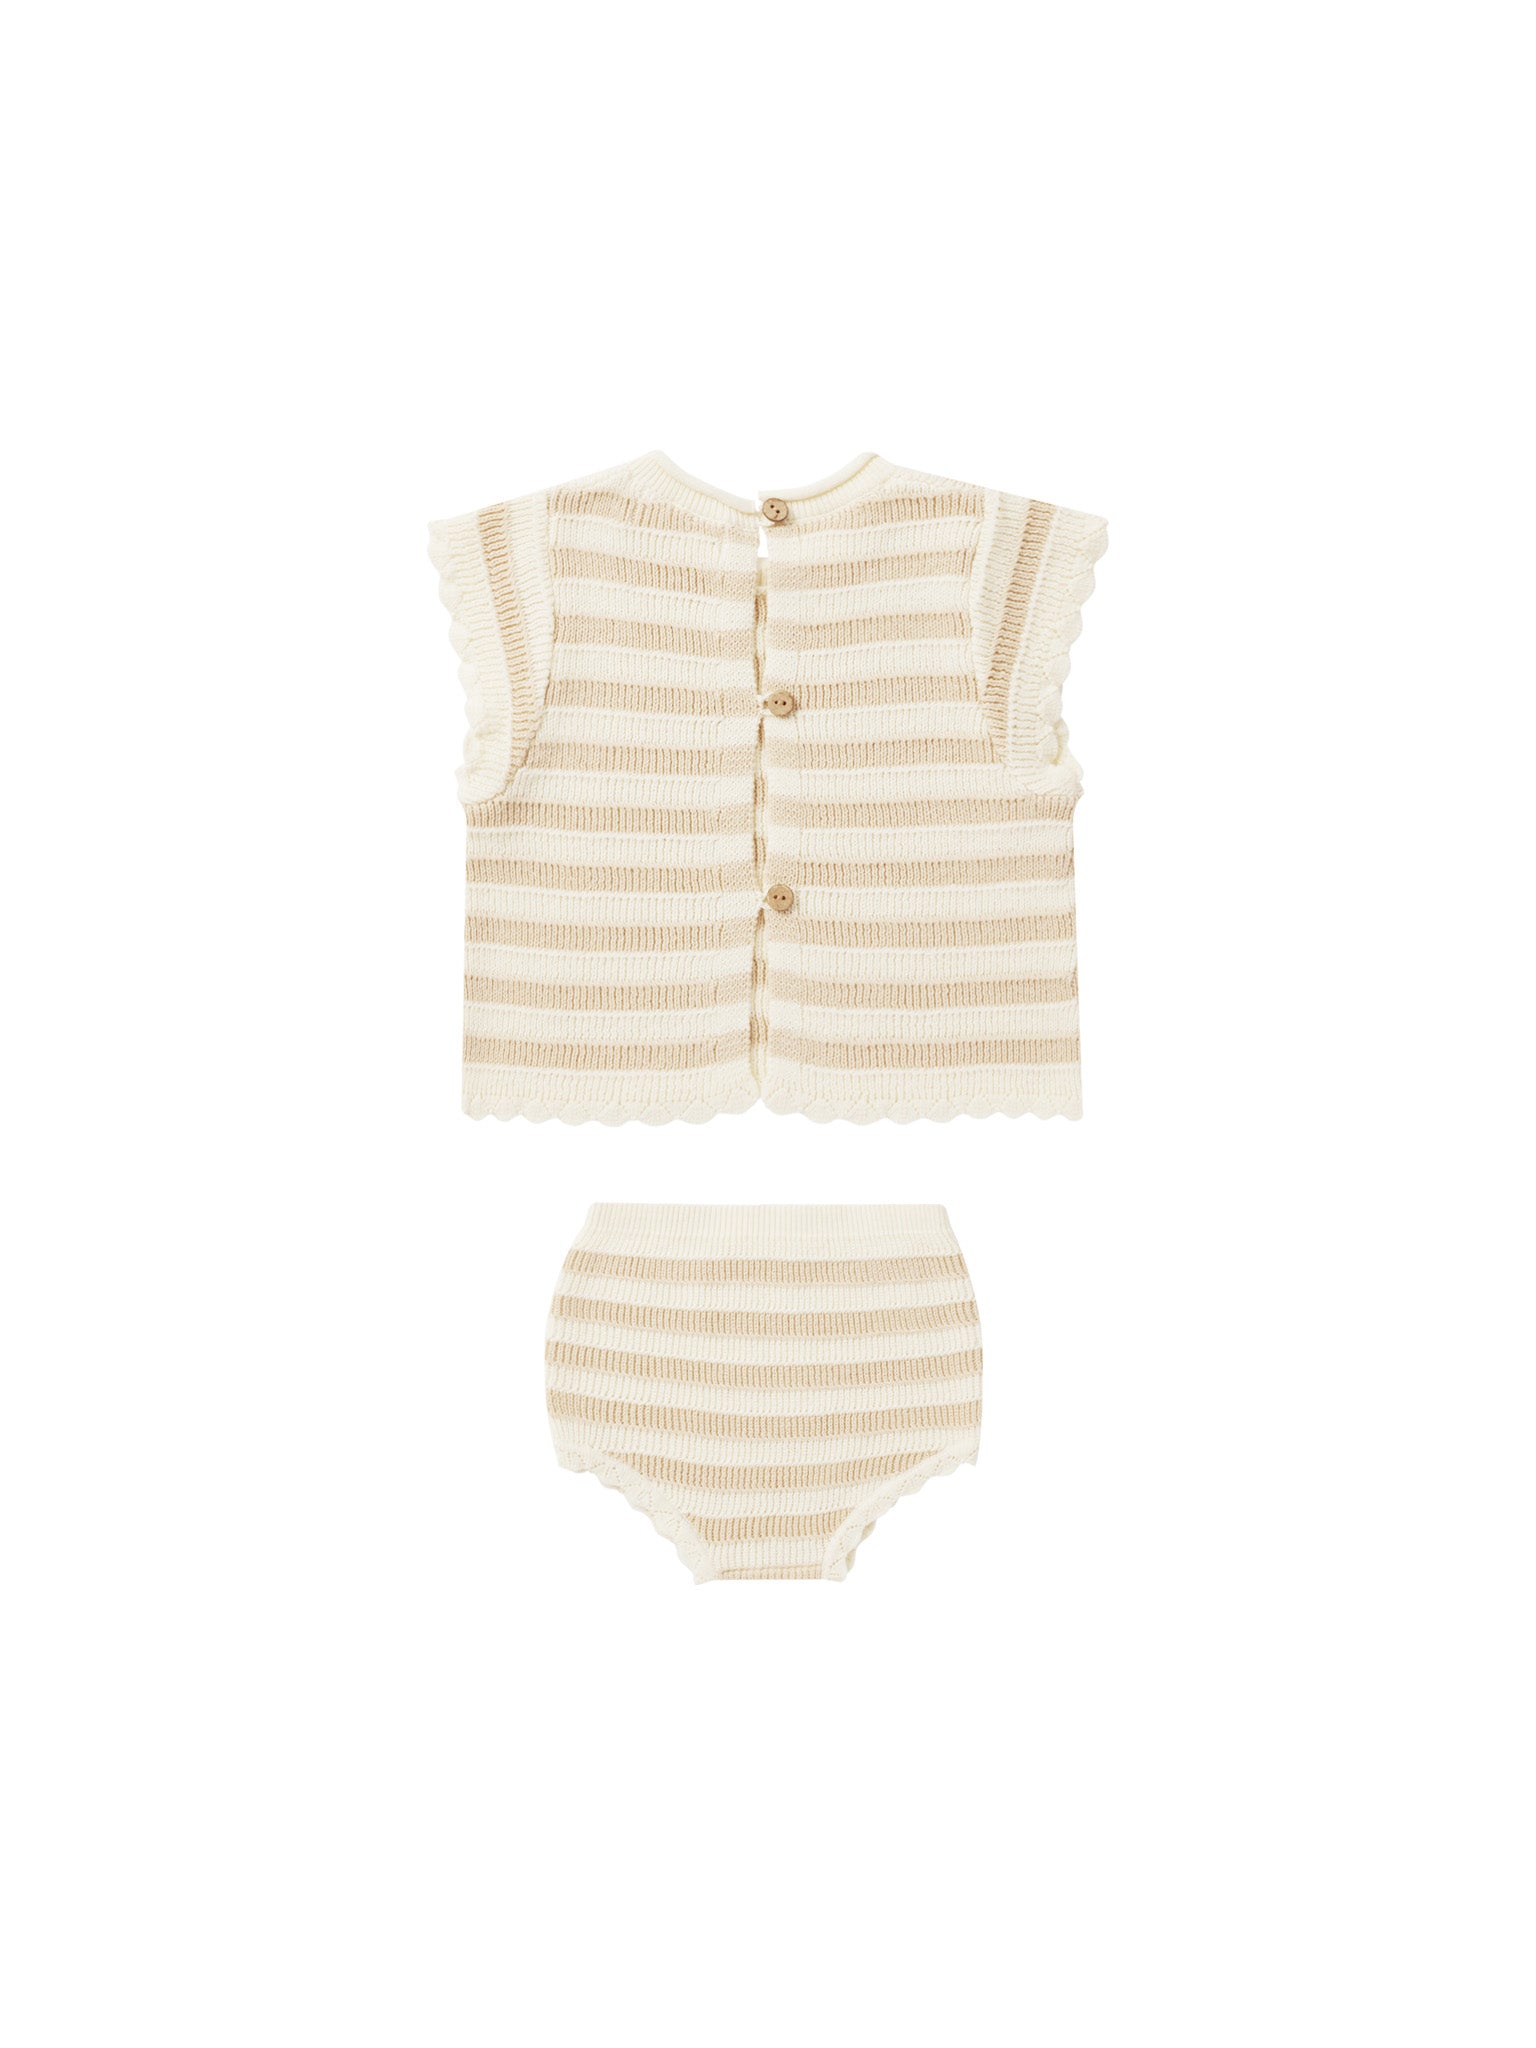 Rylee + Cru Scallop Knit Baby Set - Sand Stripe